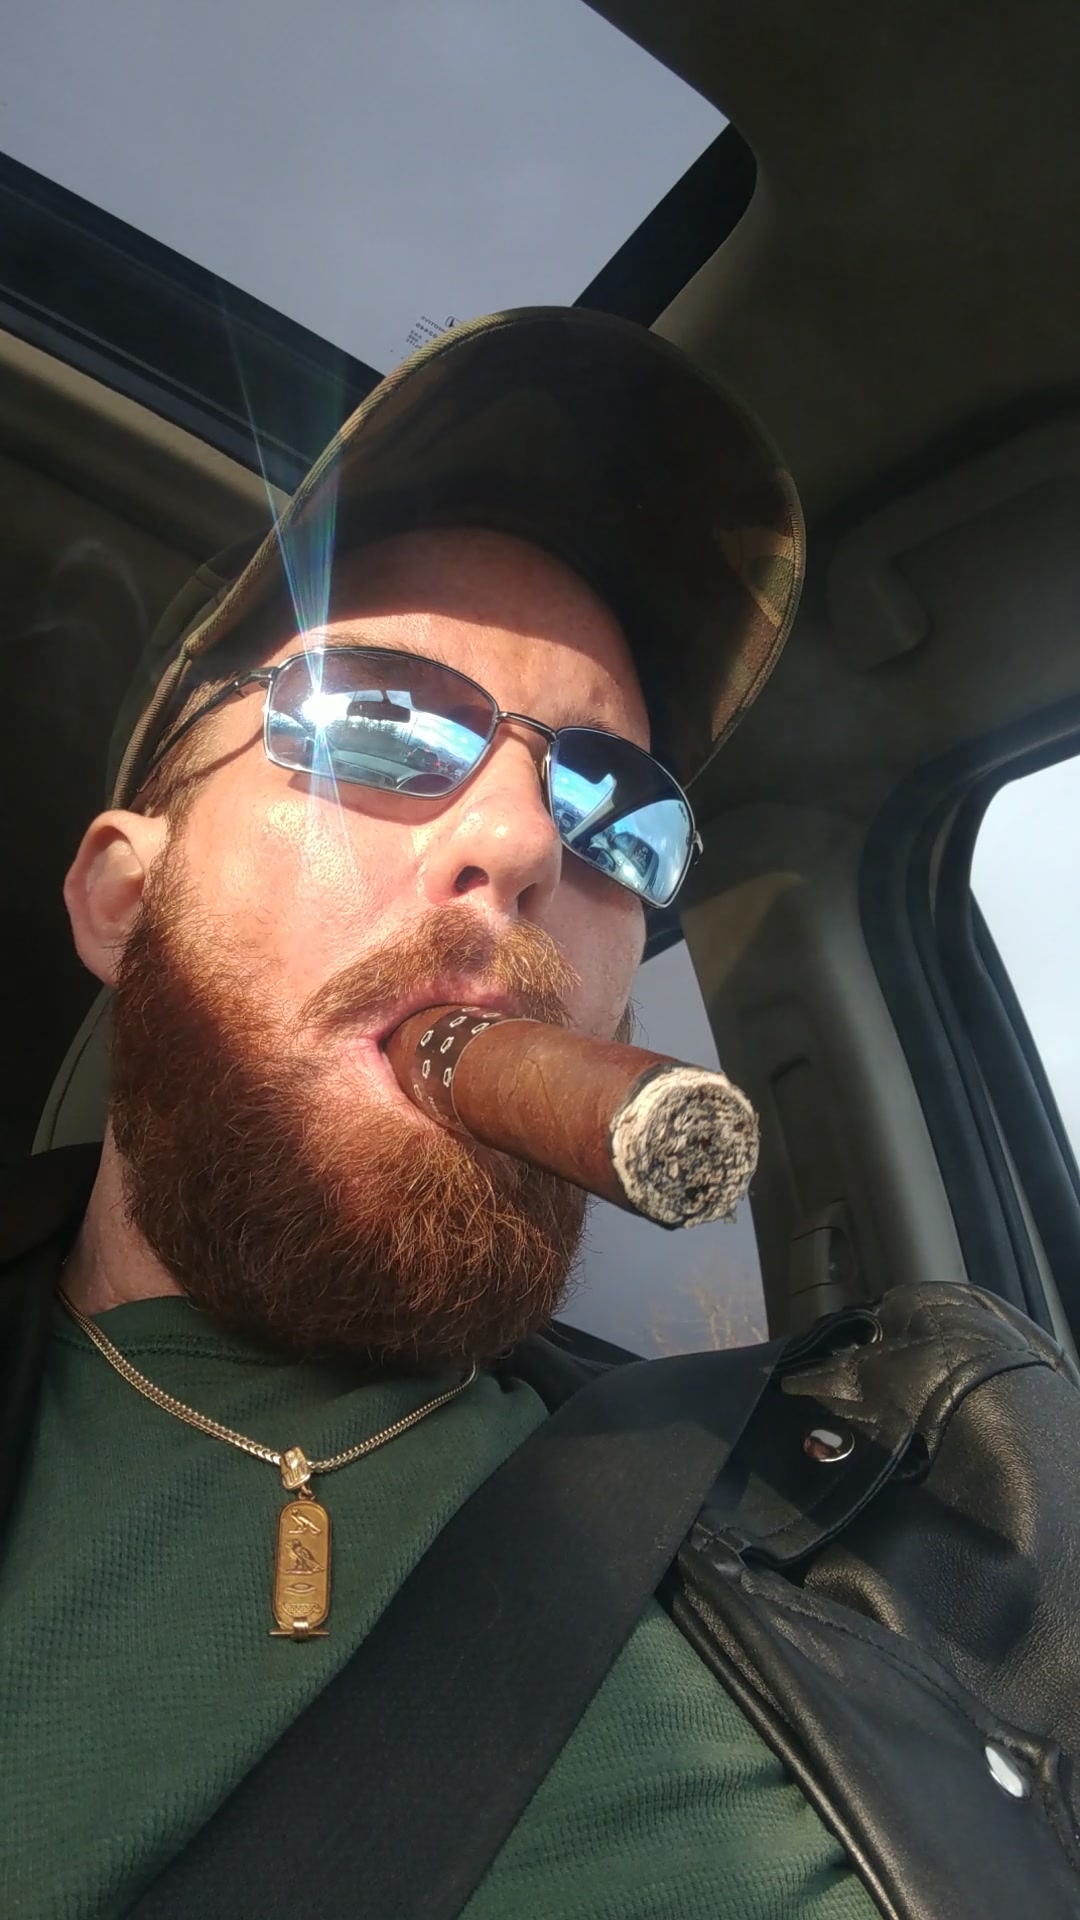 Cigarboili smoking an Asylum - video 2